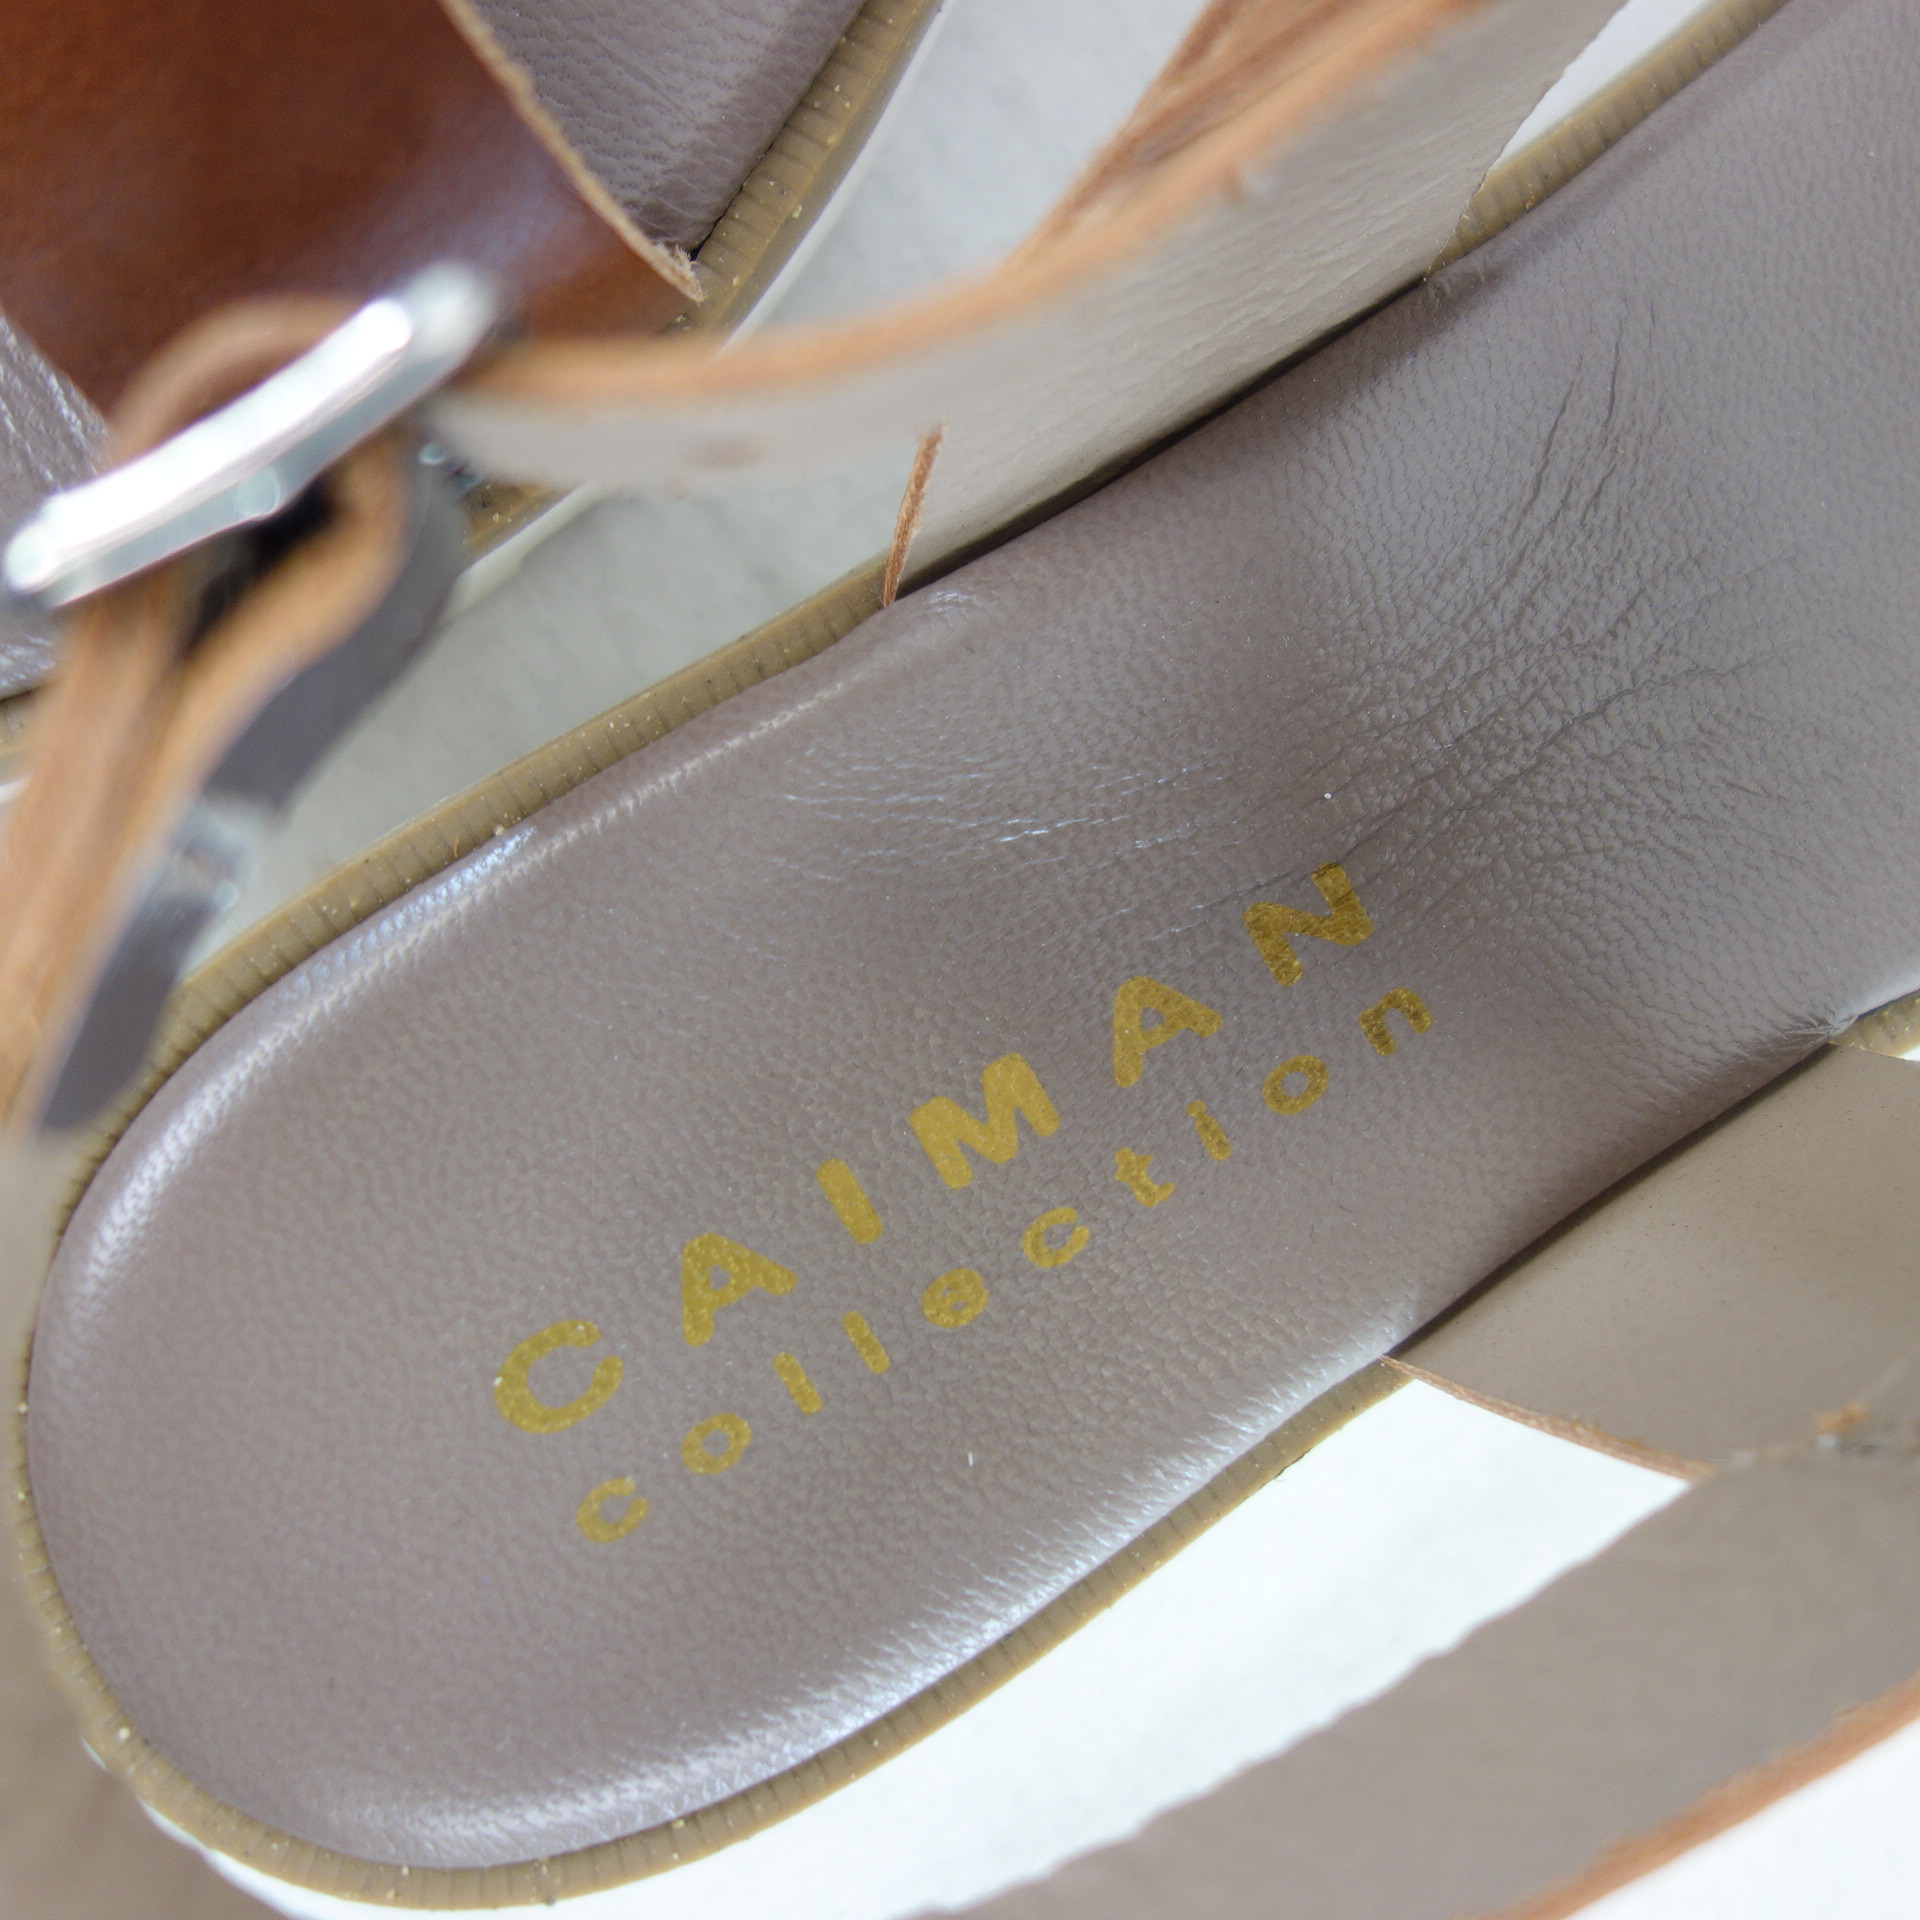 CAIMAN Damen Sommer Schuhe Flache Sandalen Braun Silber Leder Größe 40 ( 39,5 )